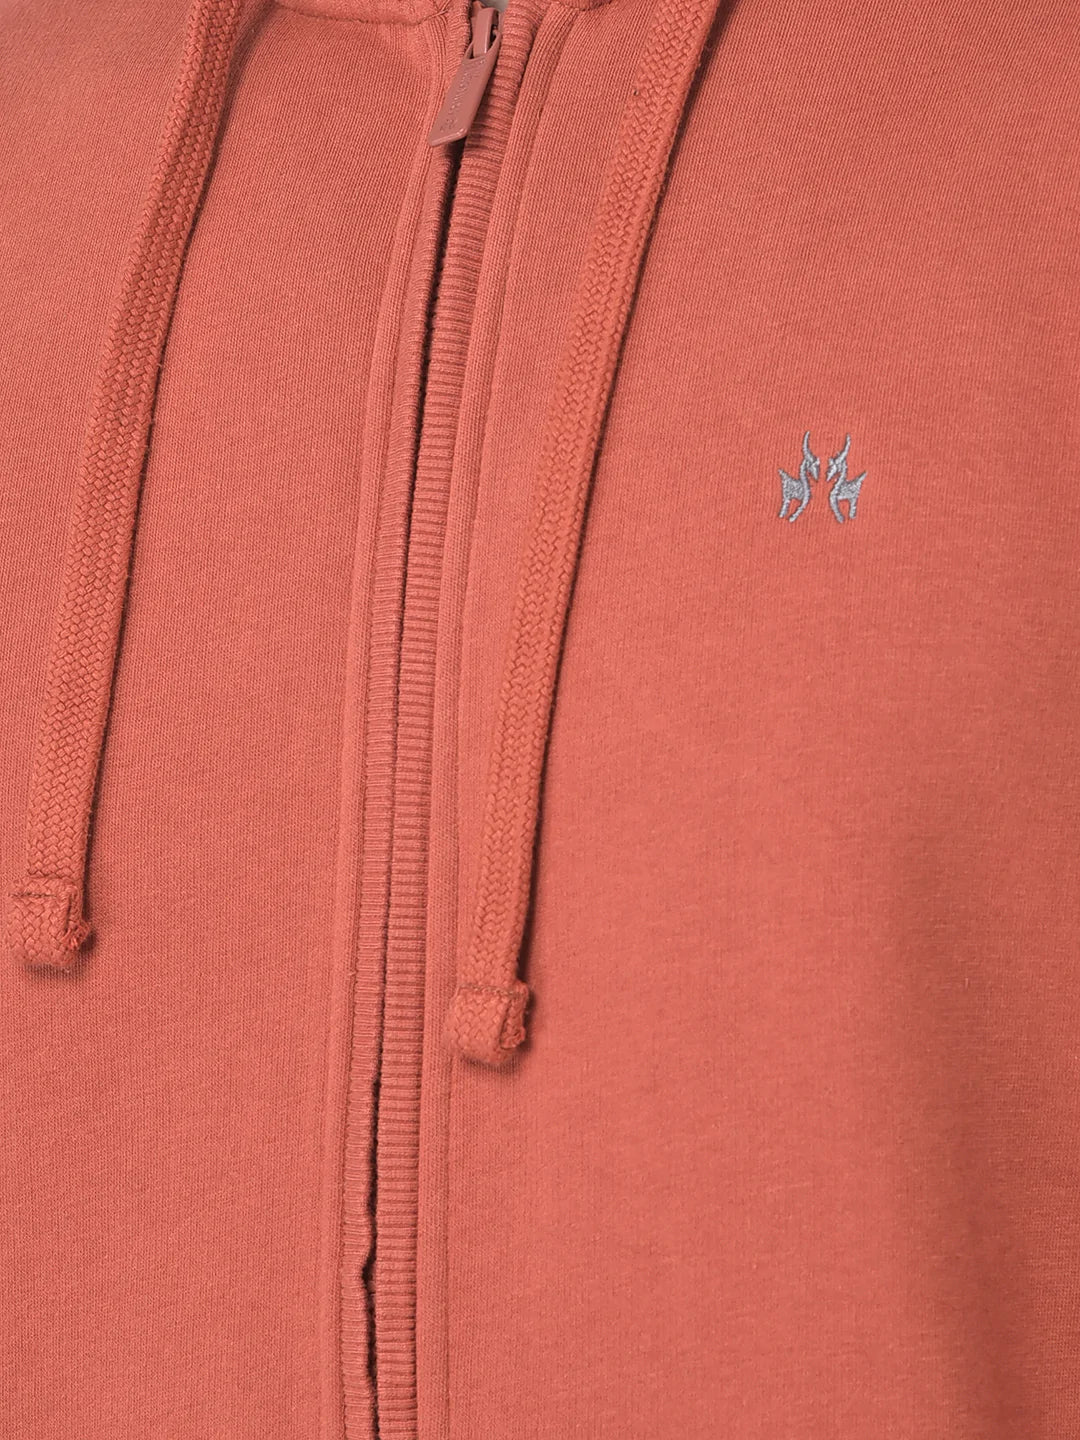  Simple Rust Zipped Sweatshirt 